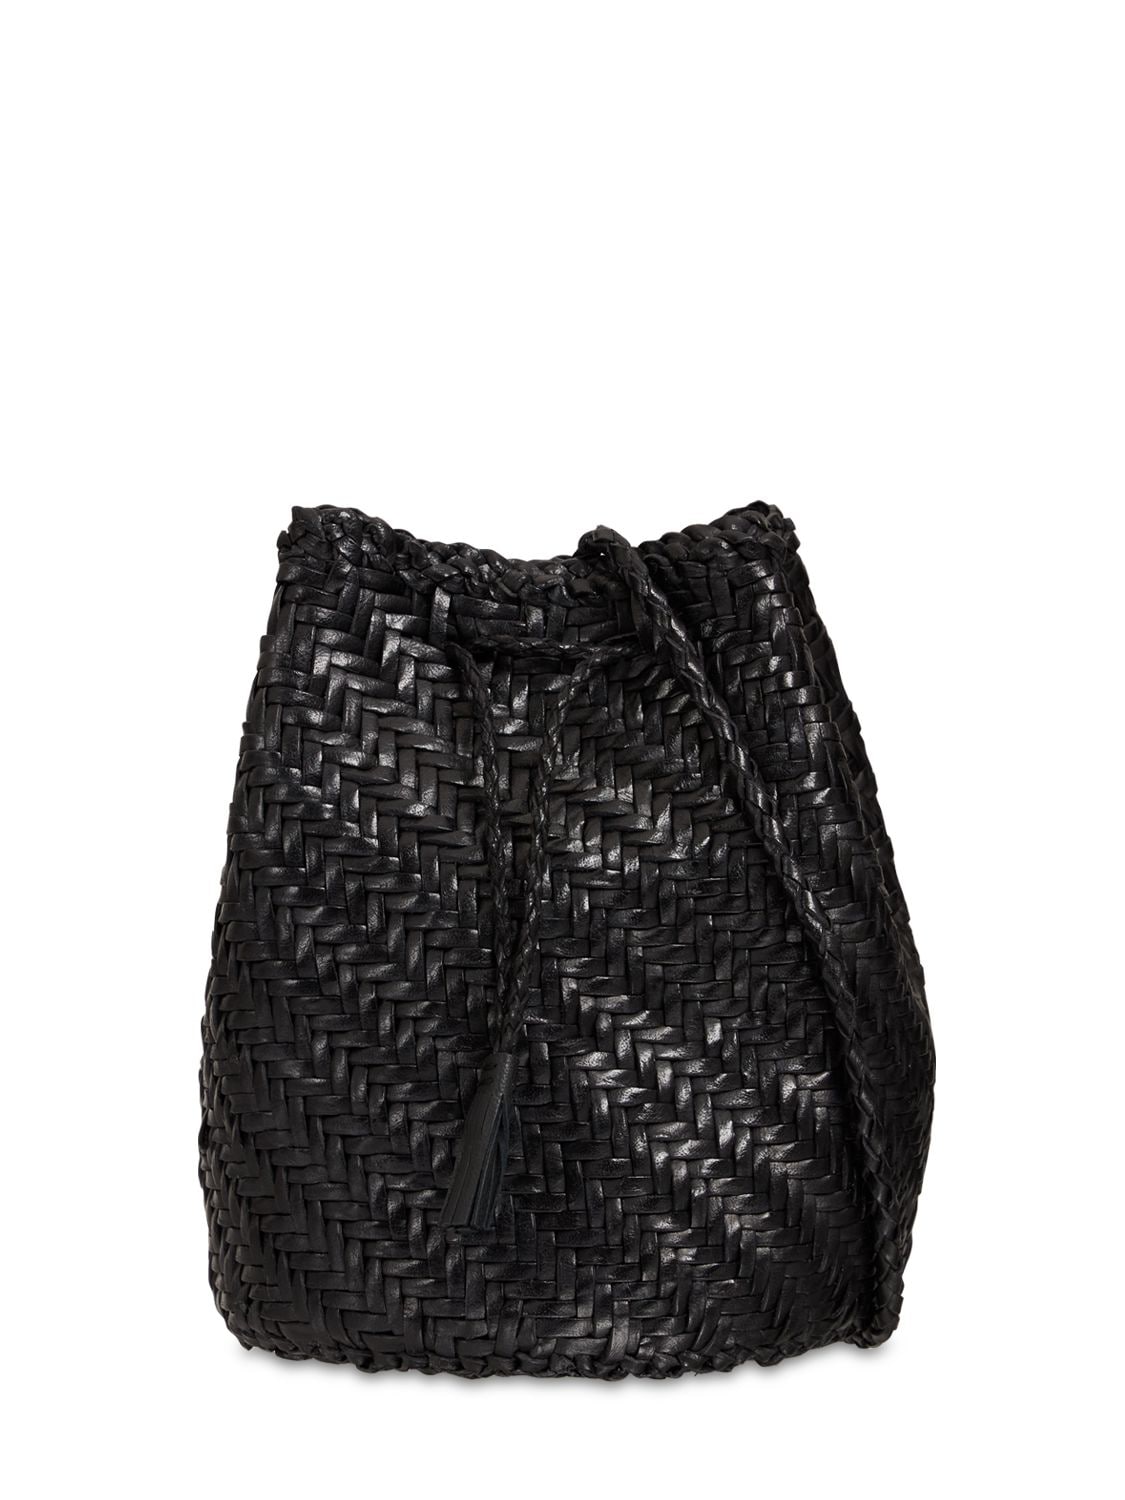 DRAGON DIFFUSION Pompom Doublej Woven Leather Basket Bag